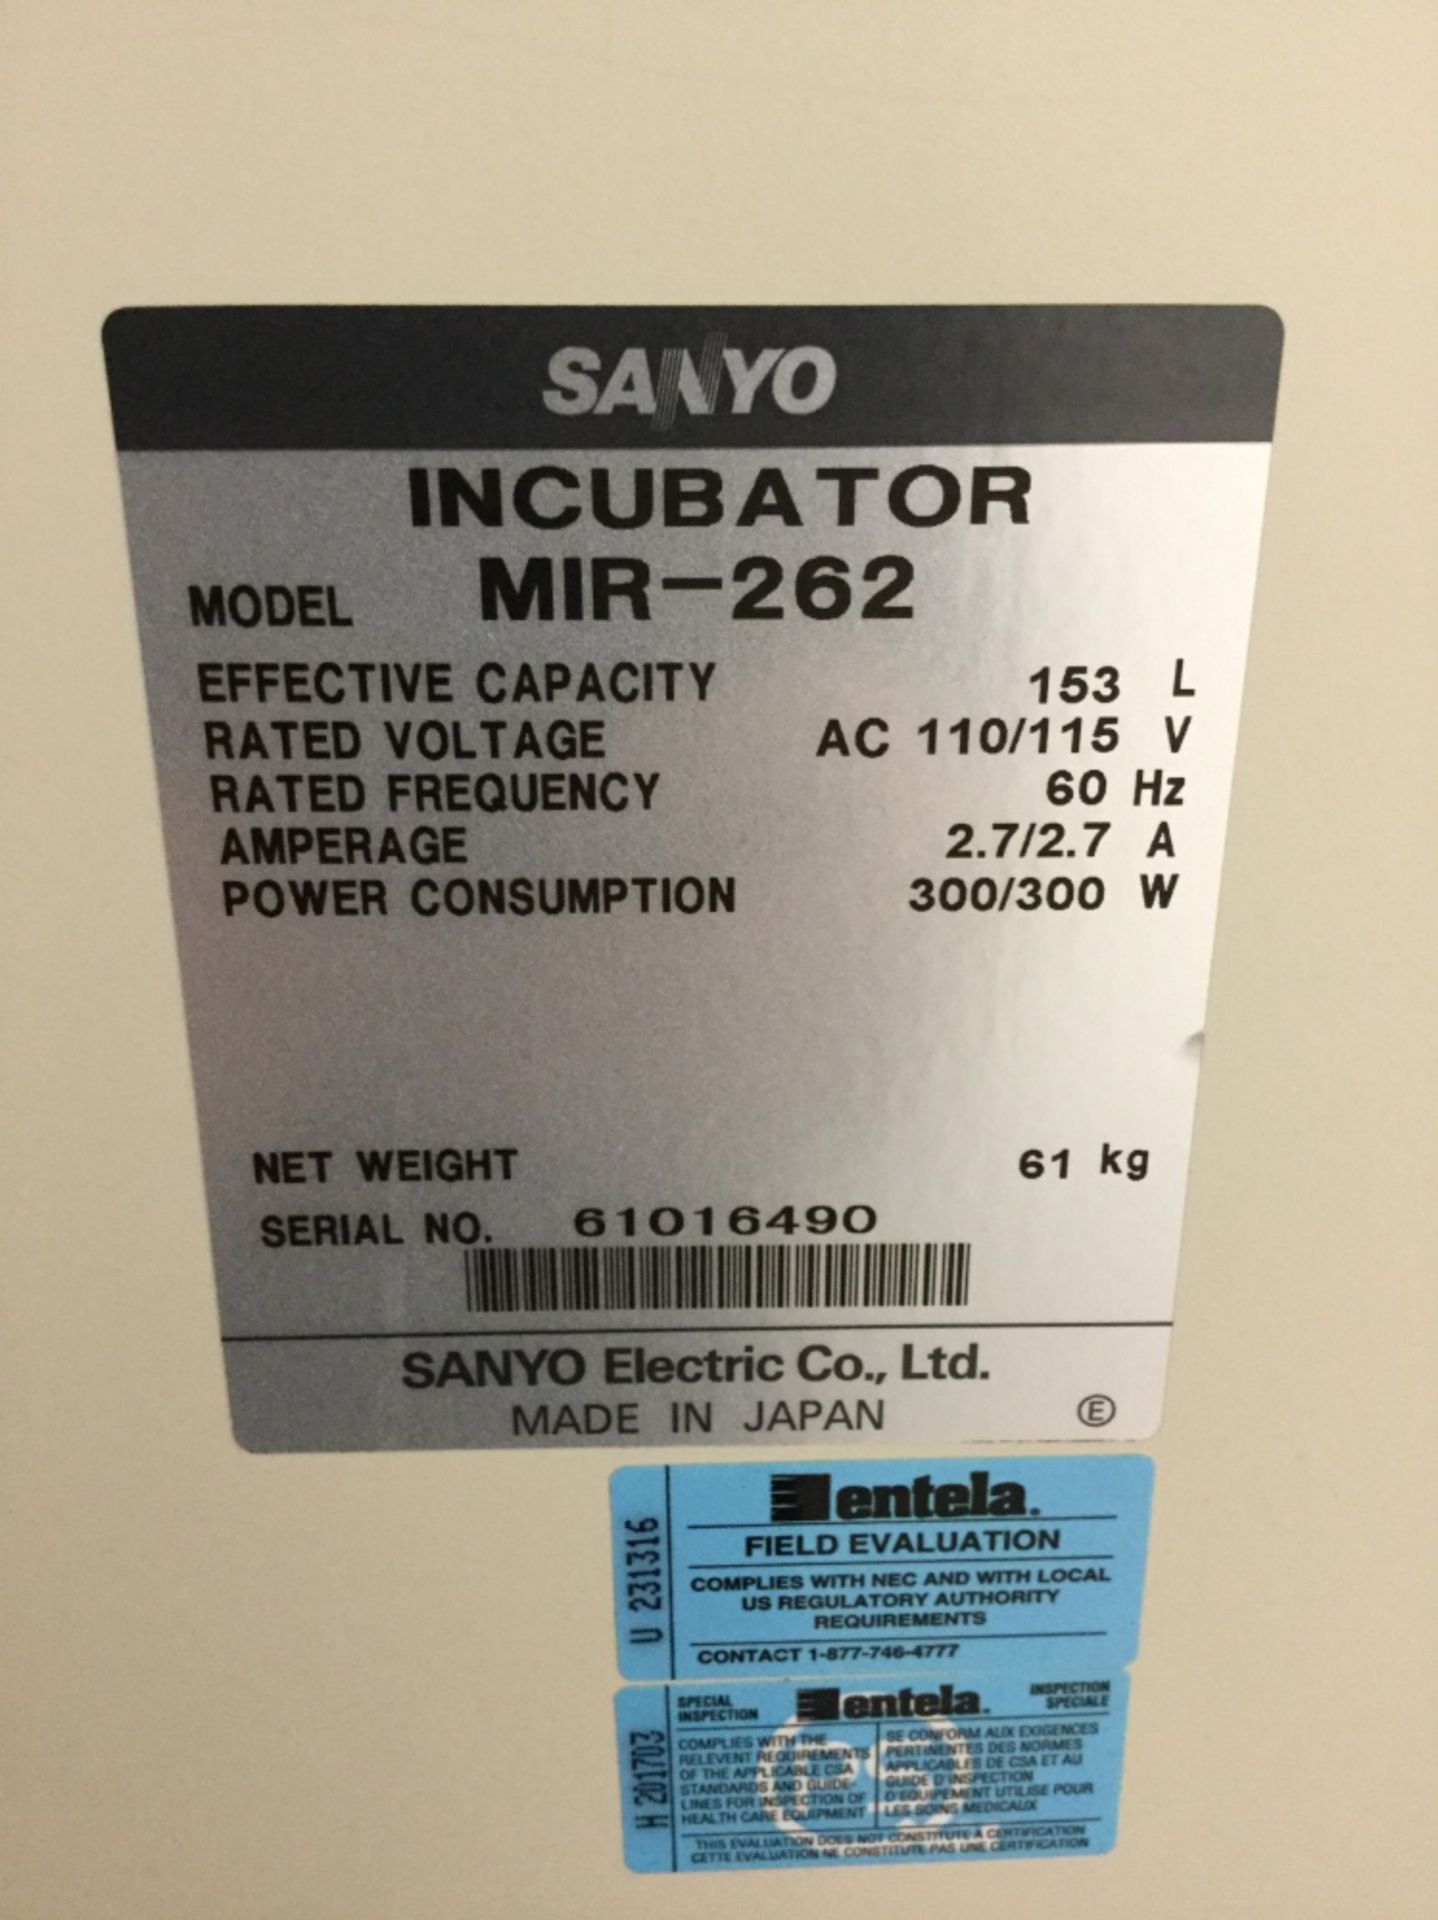 Sanyo MIR-262 Incubator - Image 2 of 3